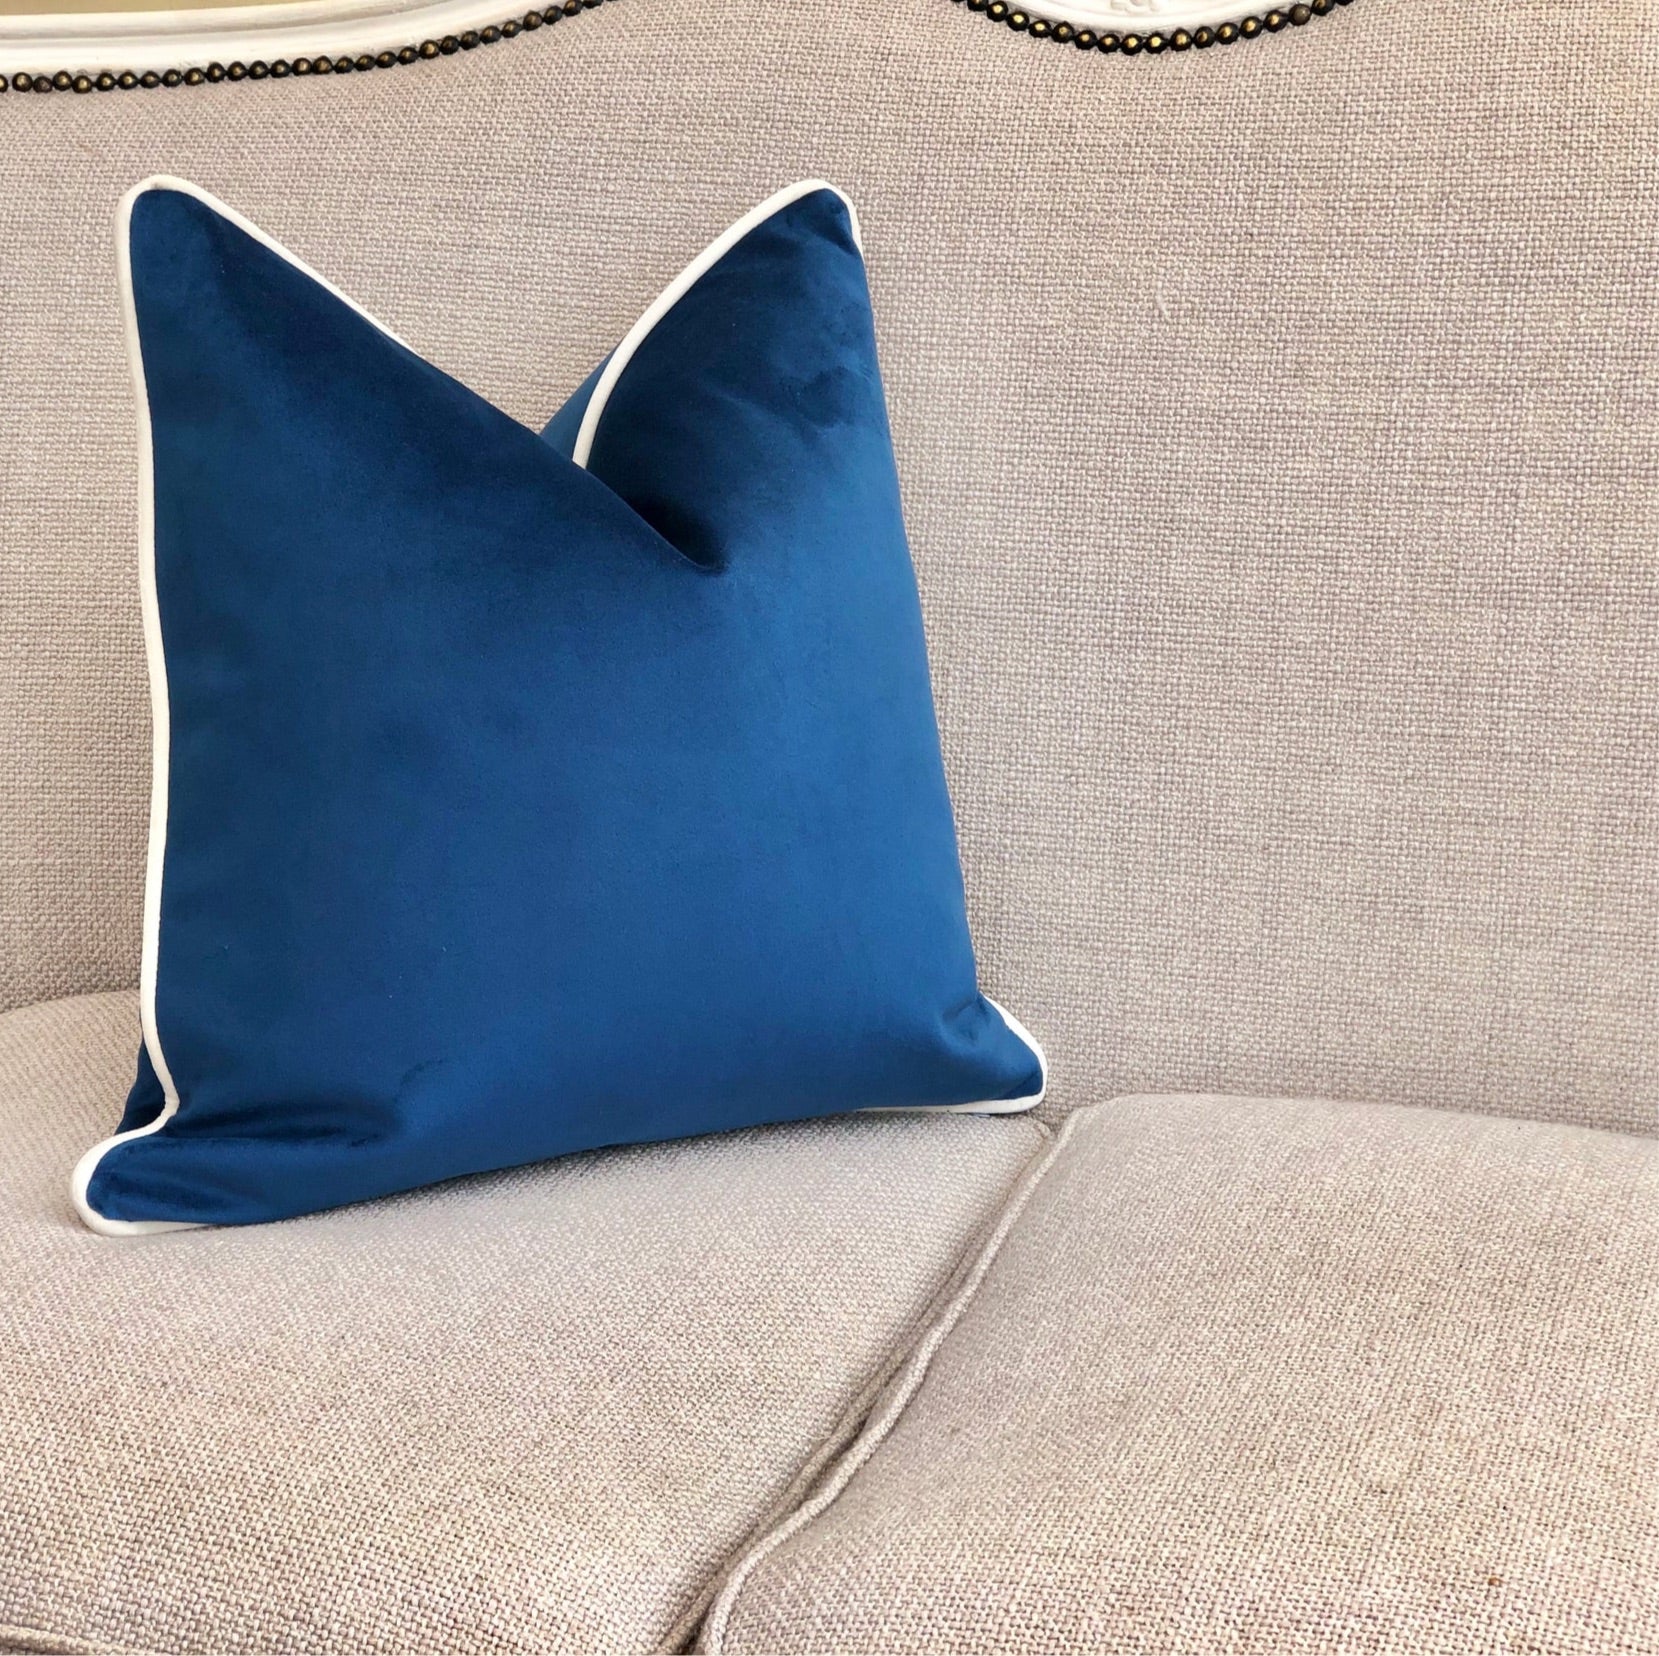 blue and white cushion